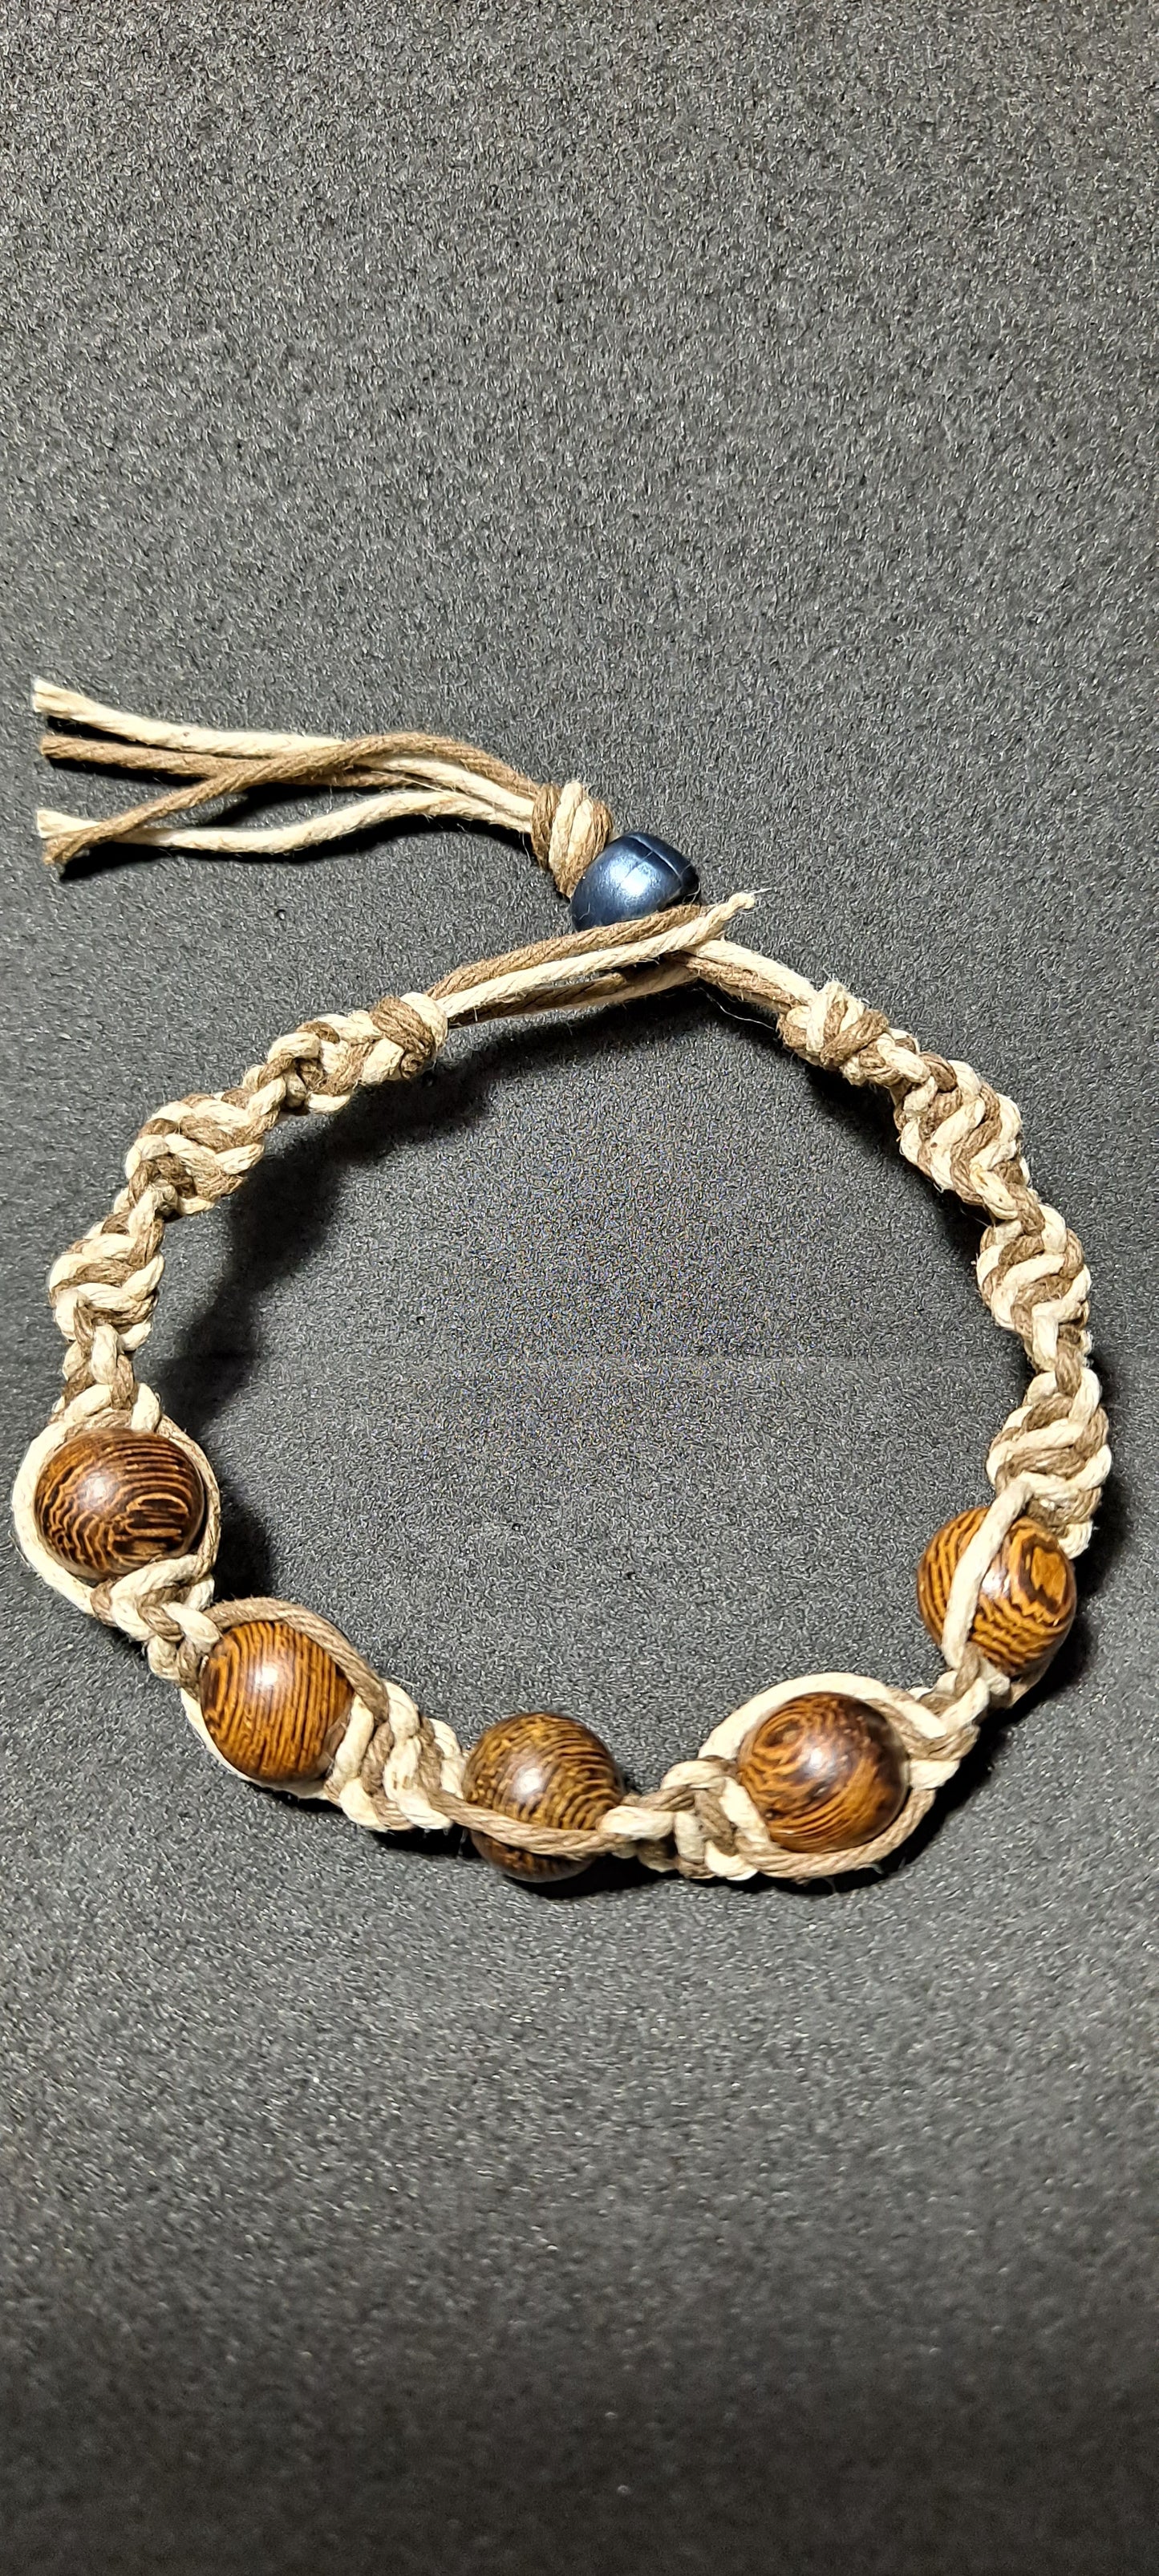 Tan & White Hemp Bracelet w/ Wood Grain Beads